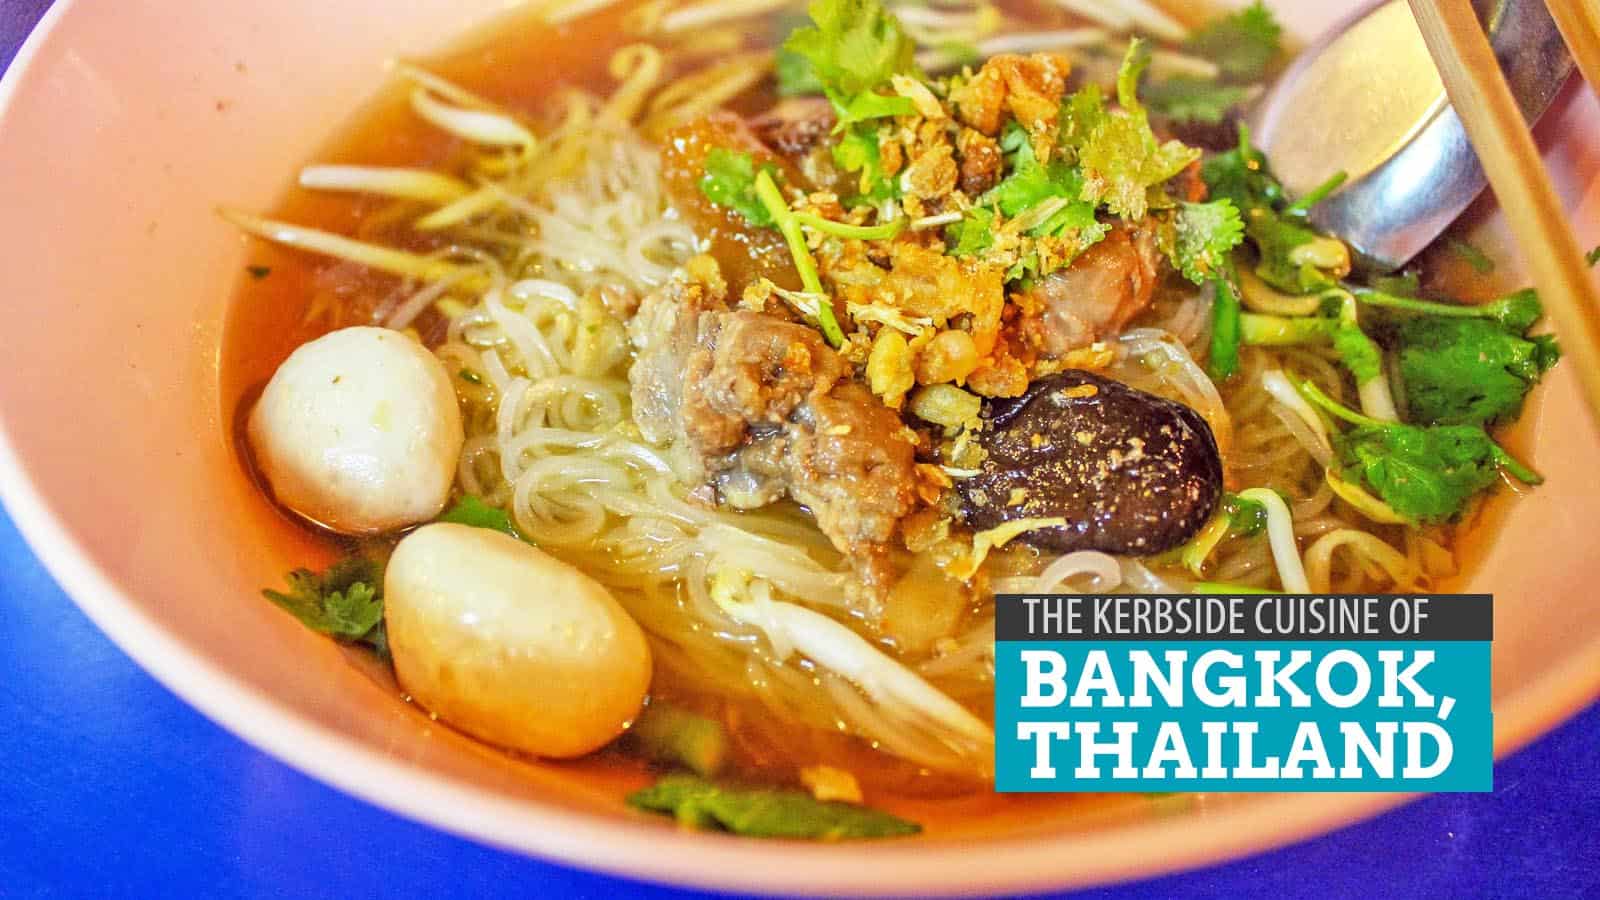 The Kerbside Cuisine of Bangkok, Thailand